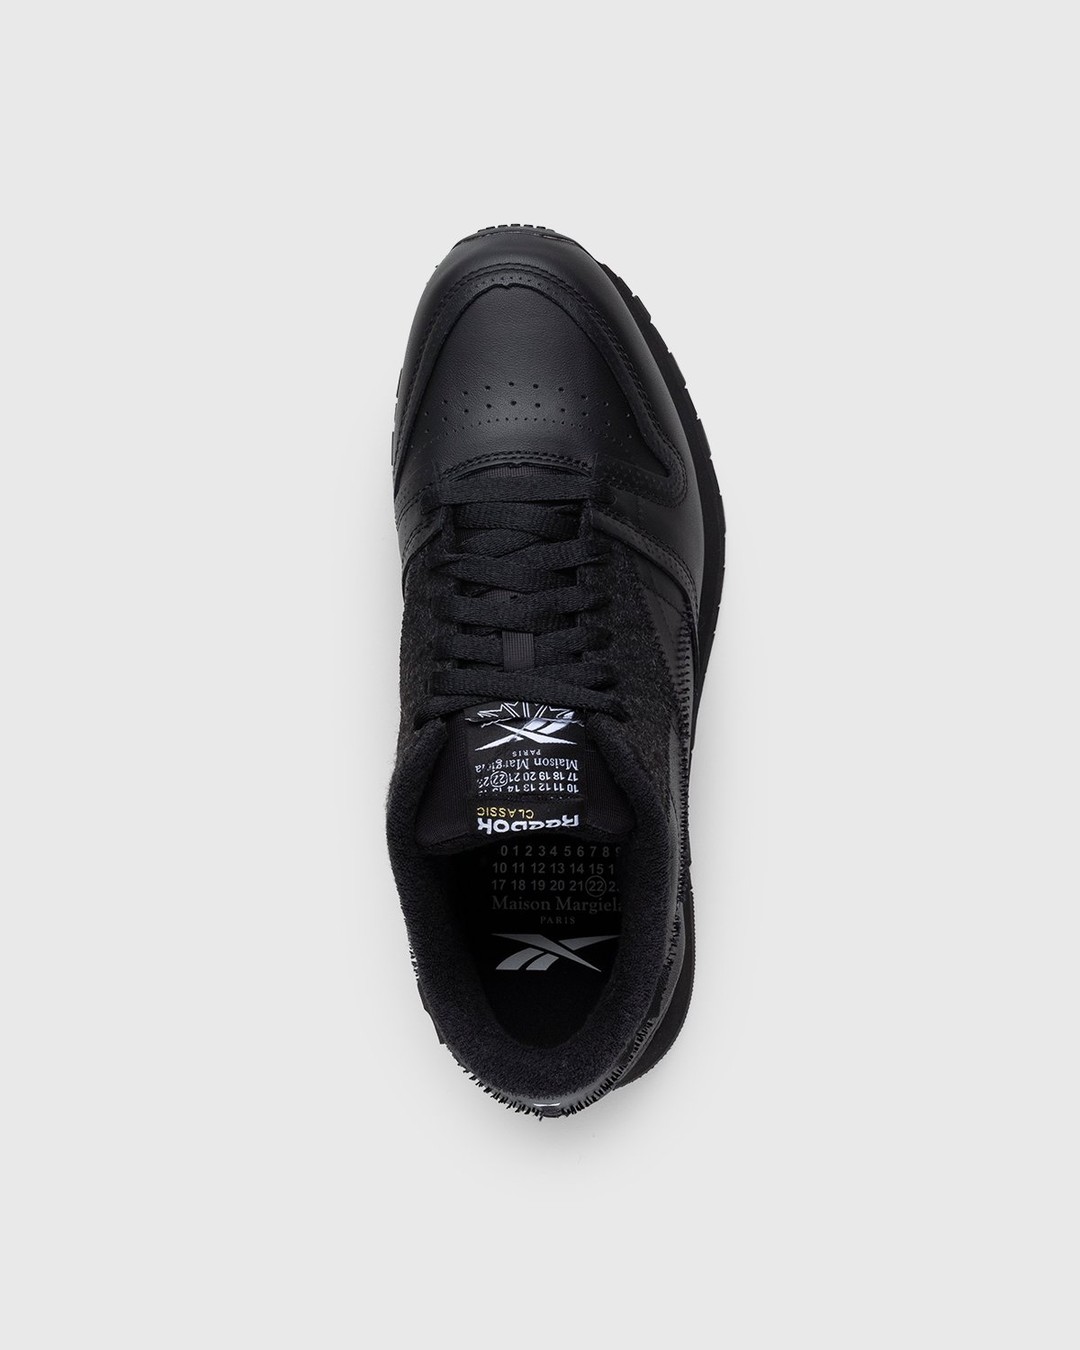 Maison Margiela x Reebok – Leather Memory Of Black/Footwear White/ Black Highsnobiety Shop